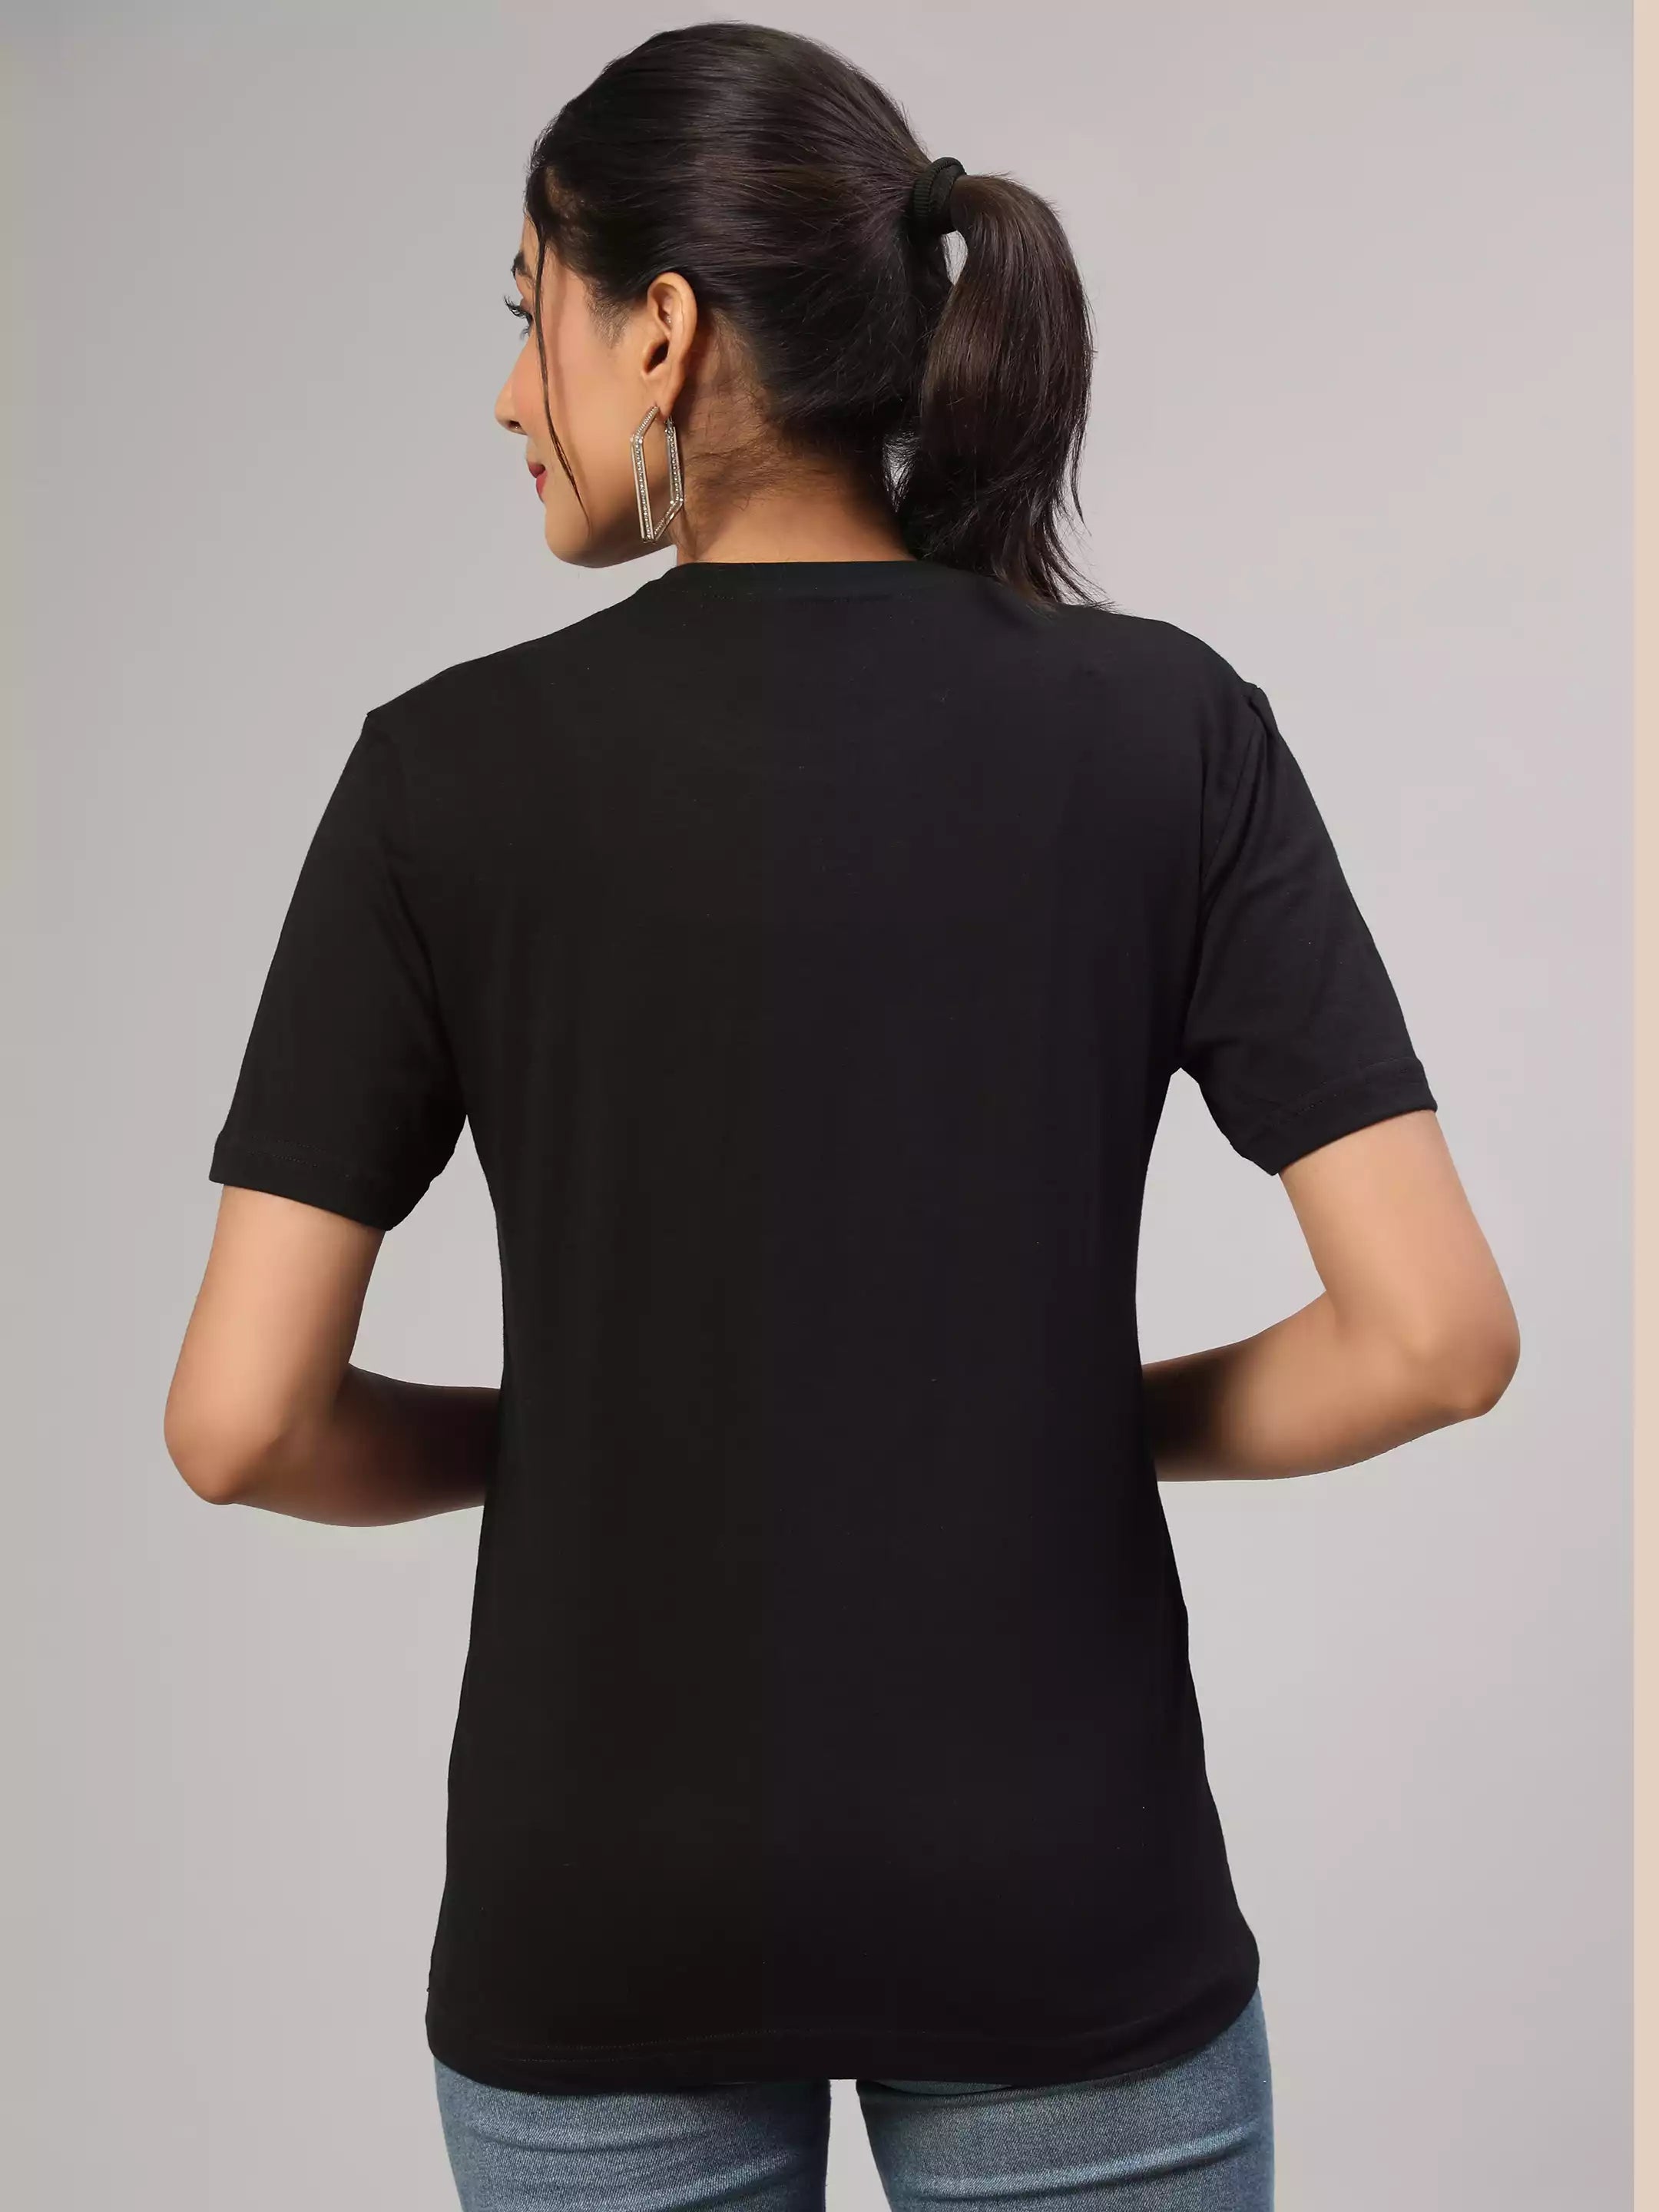 Gharchyanche Rules - Sukhiaatma Unisex Marathi Graphic Printed Black T-shirt